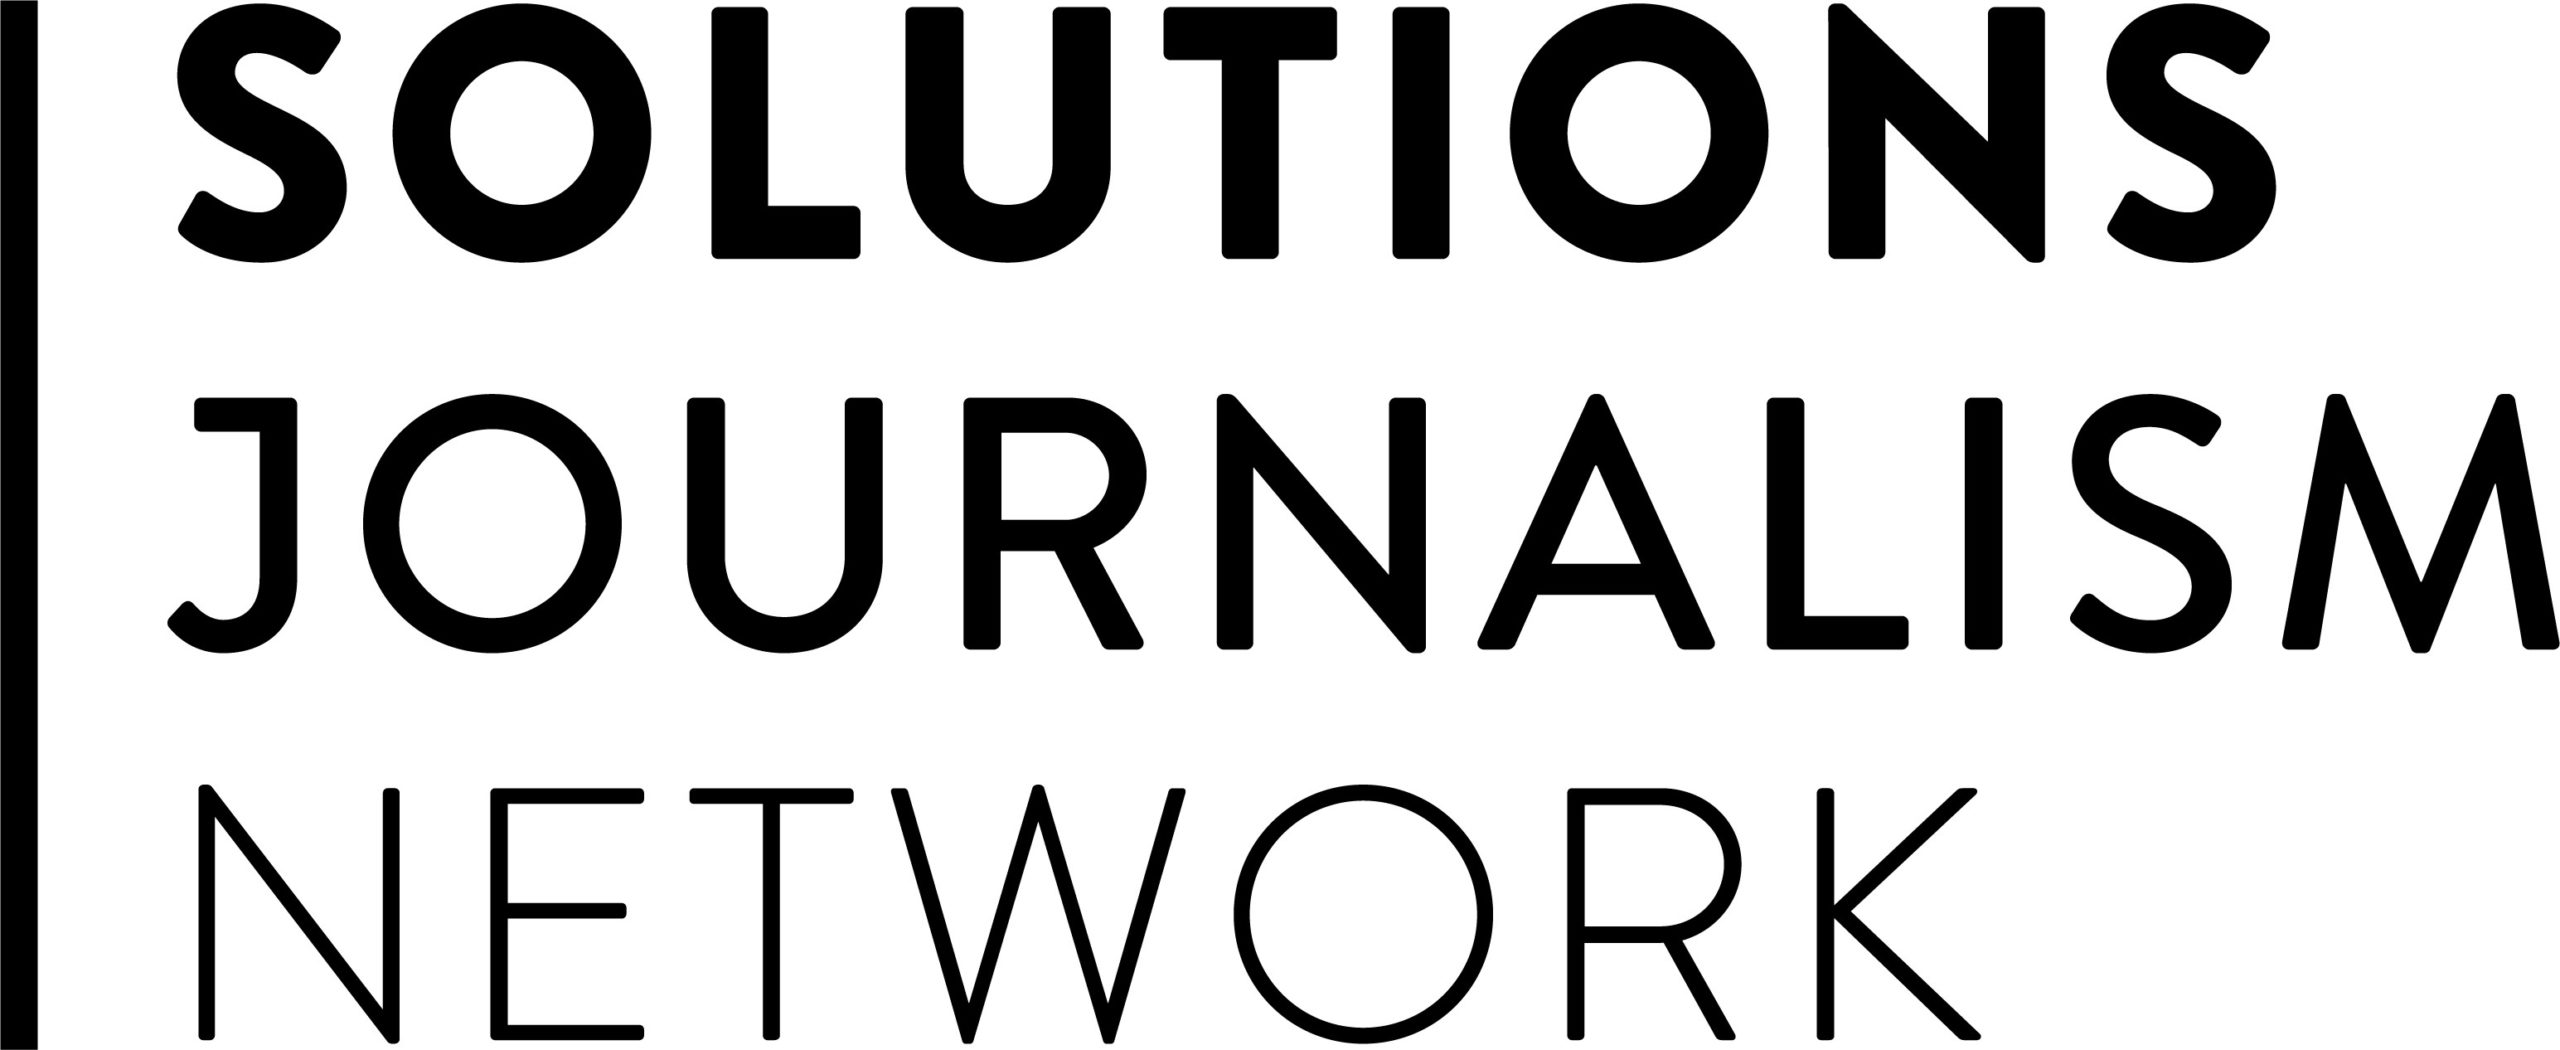 Solutions Journalism Network logo